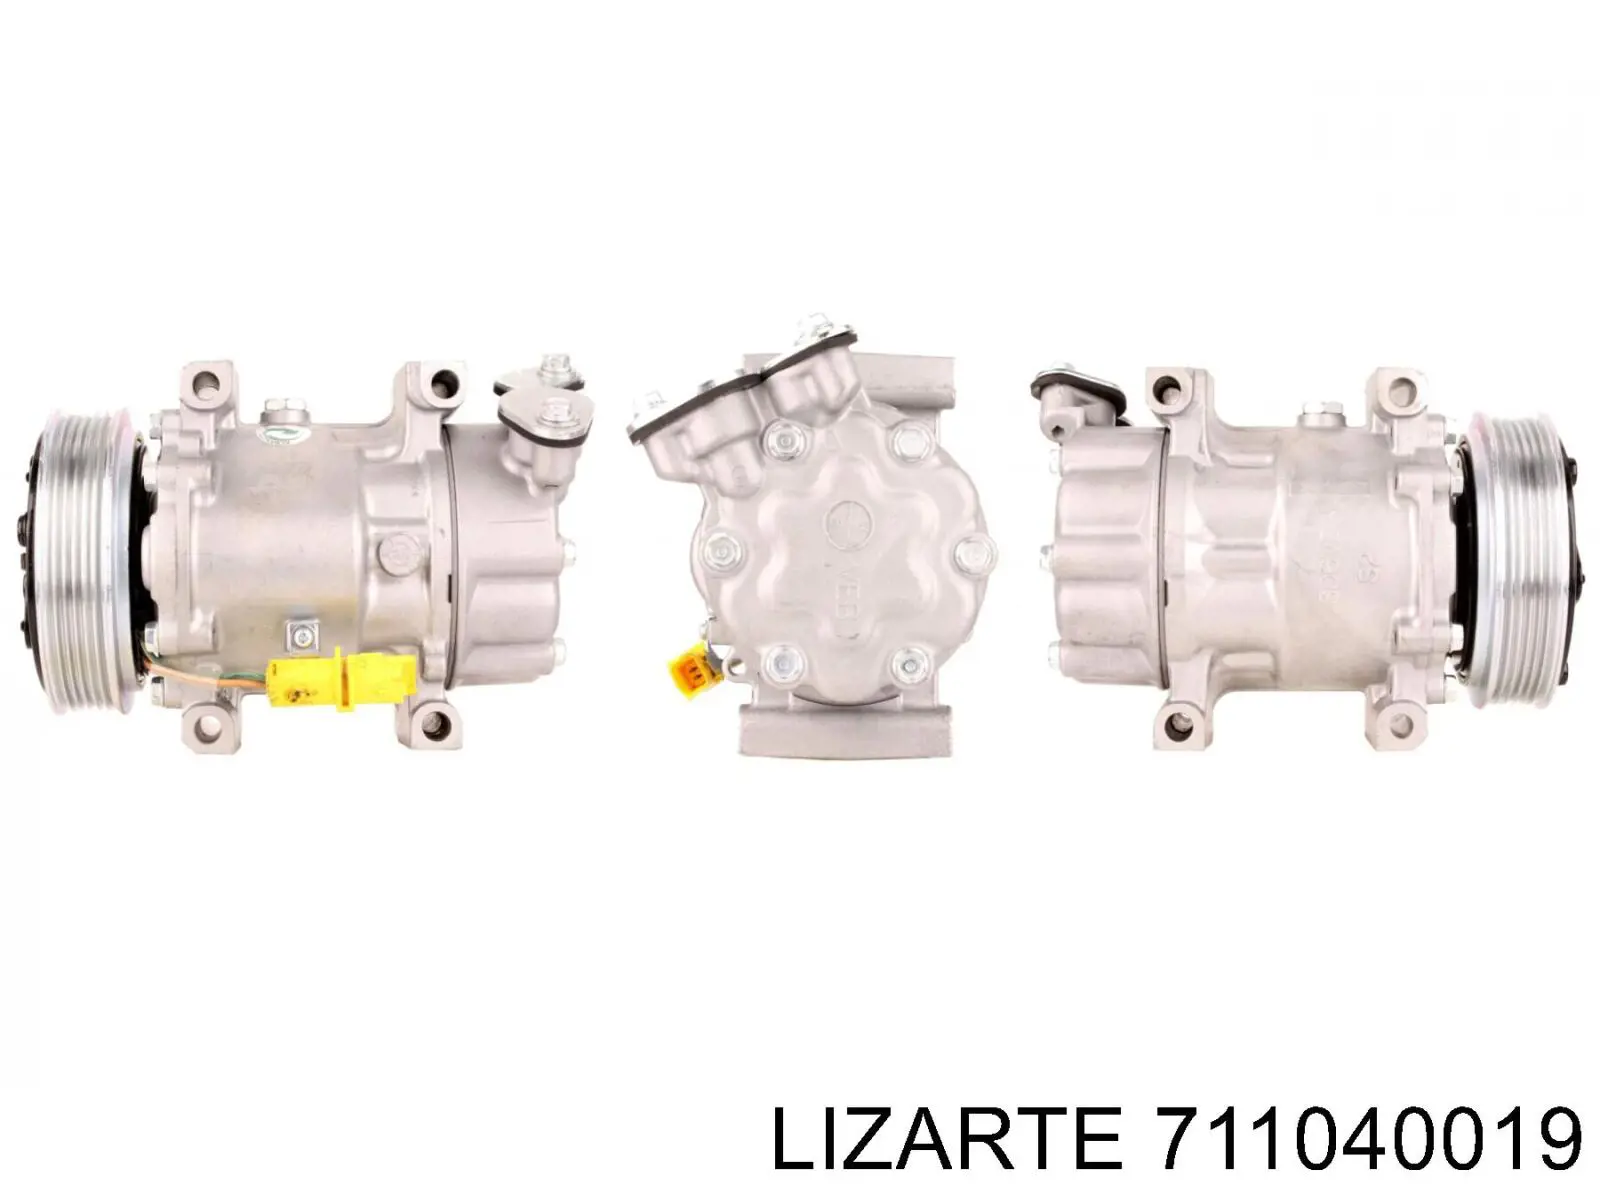 711040019 Lizarte compresor de aire acondicionado